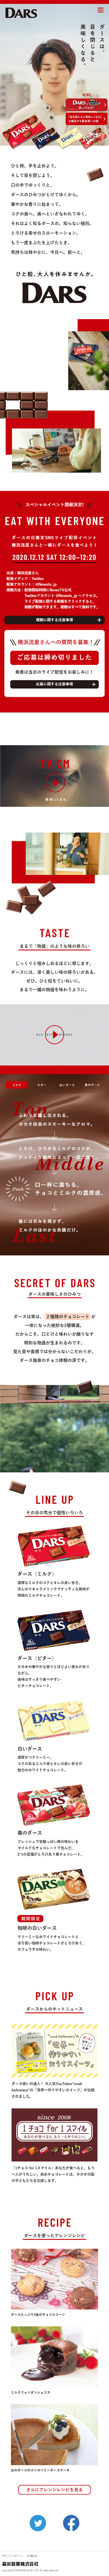 DARS_sp_1